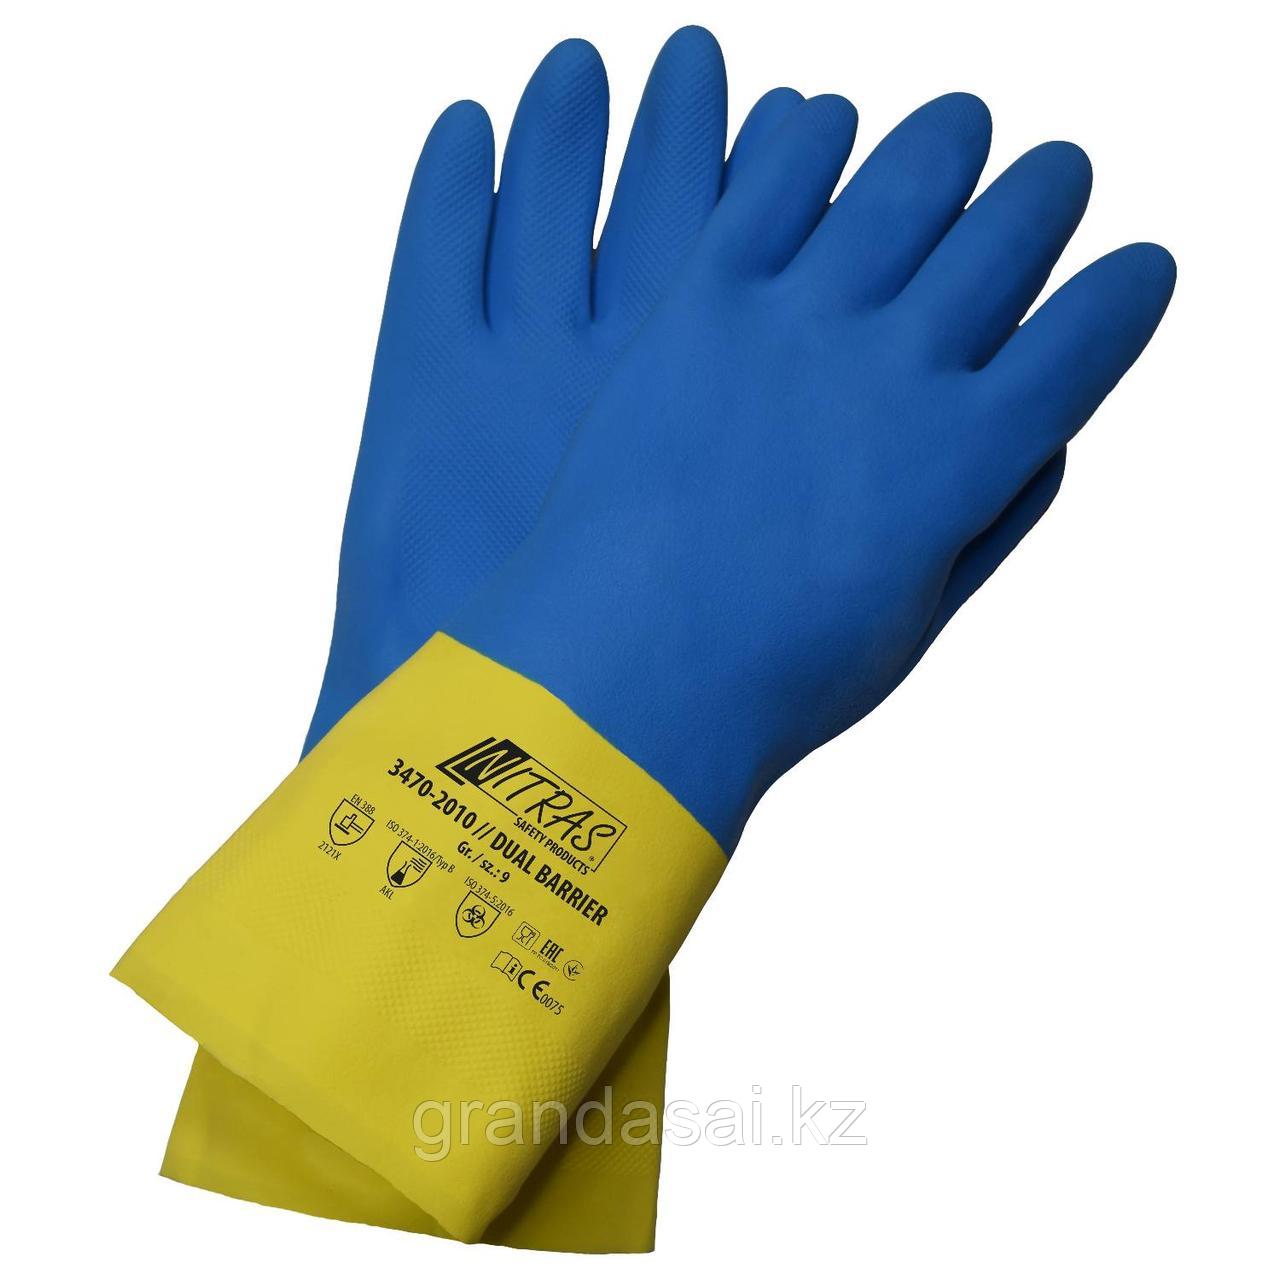 Химзащитные перчатки NITRAS DUAL BARRIER